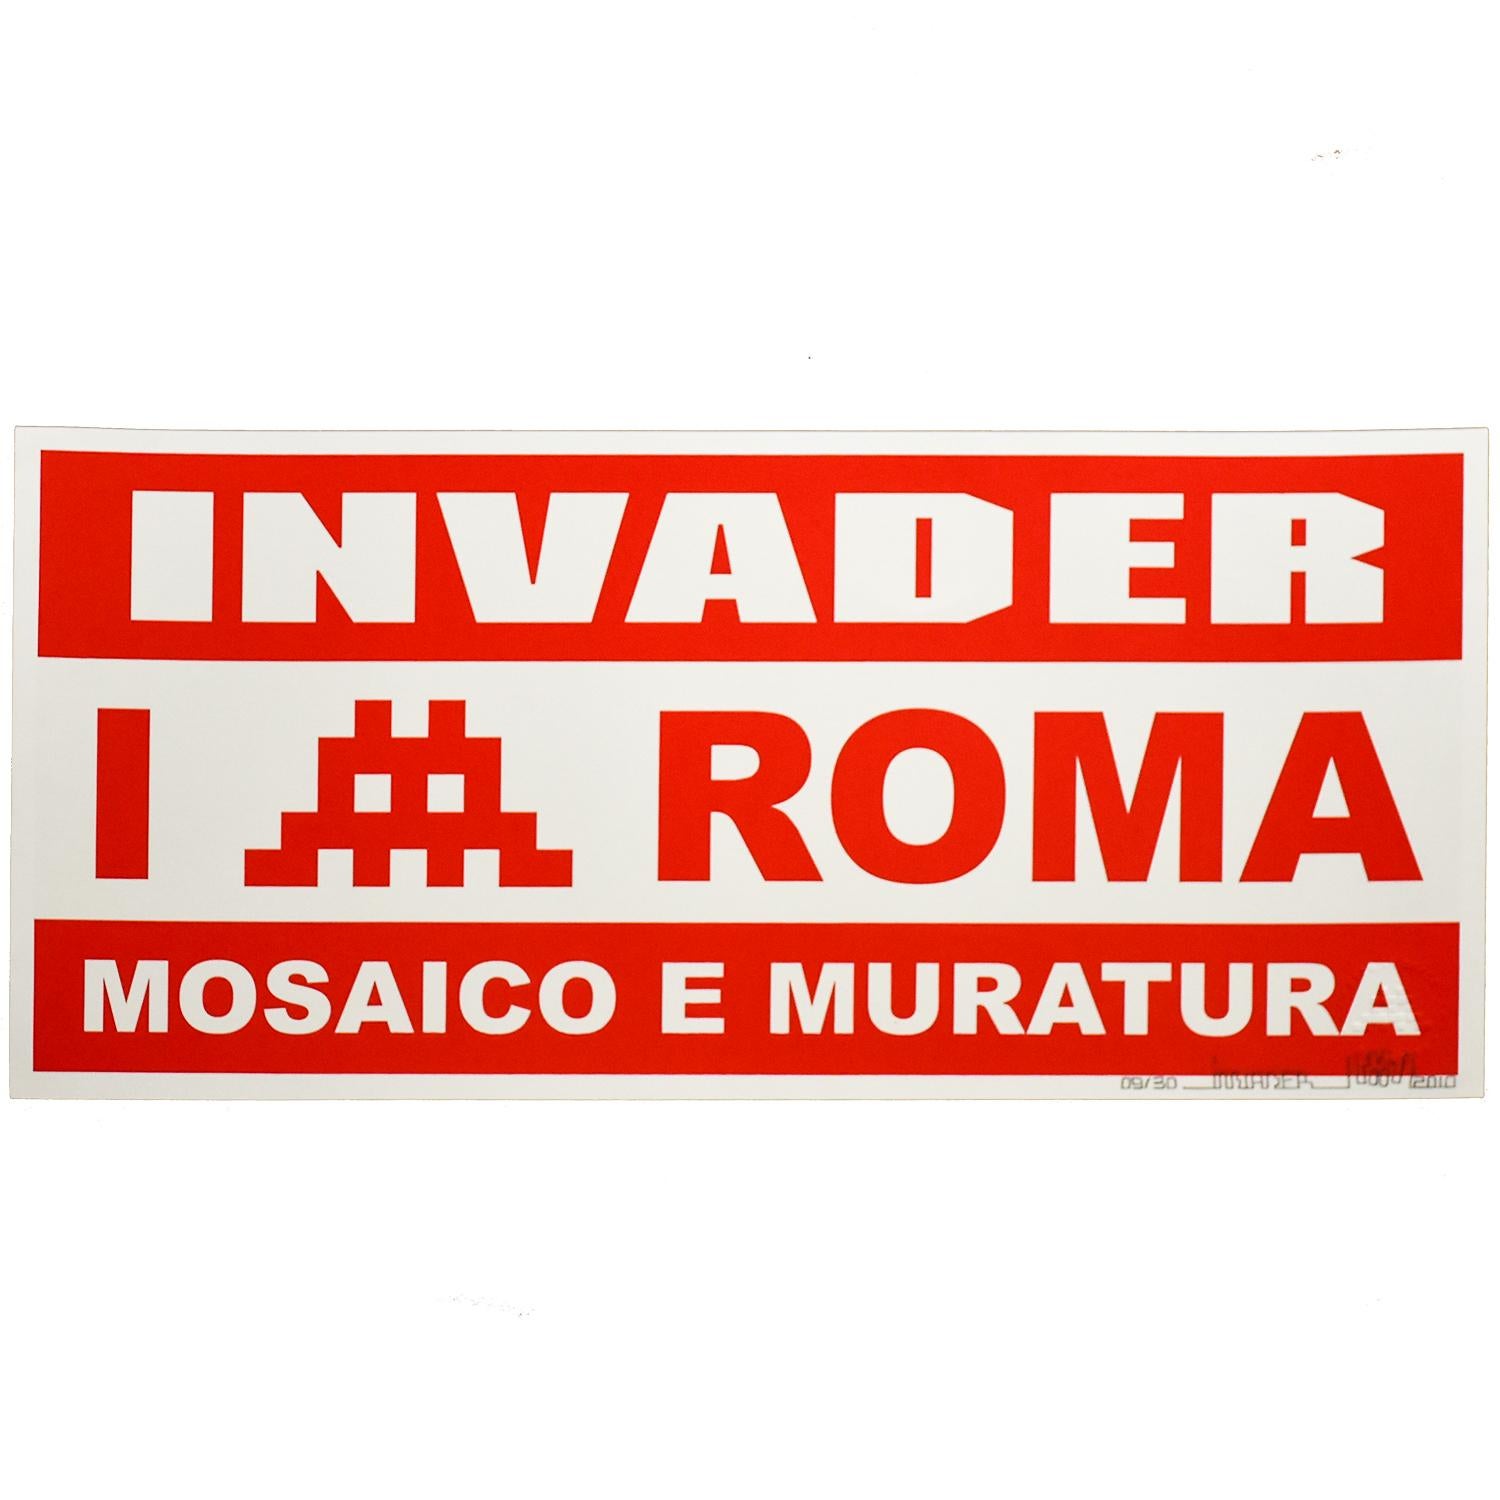 INVADER Mosaico E Muratura, Mosaico – Print von Invader